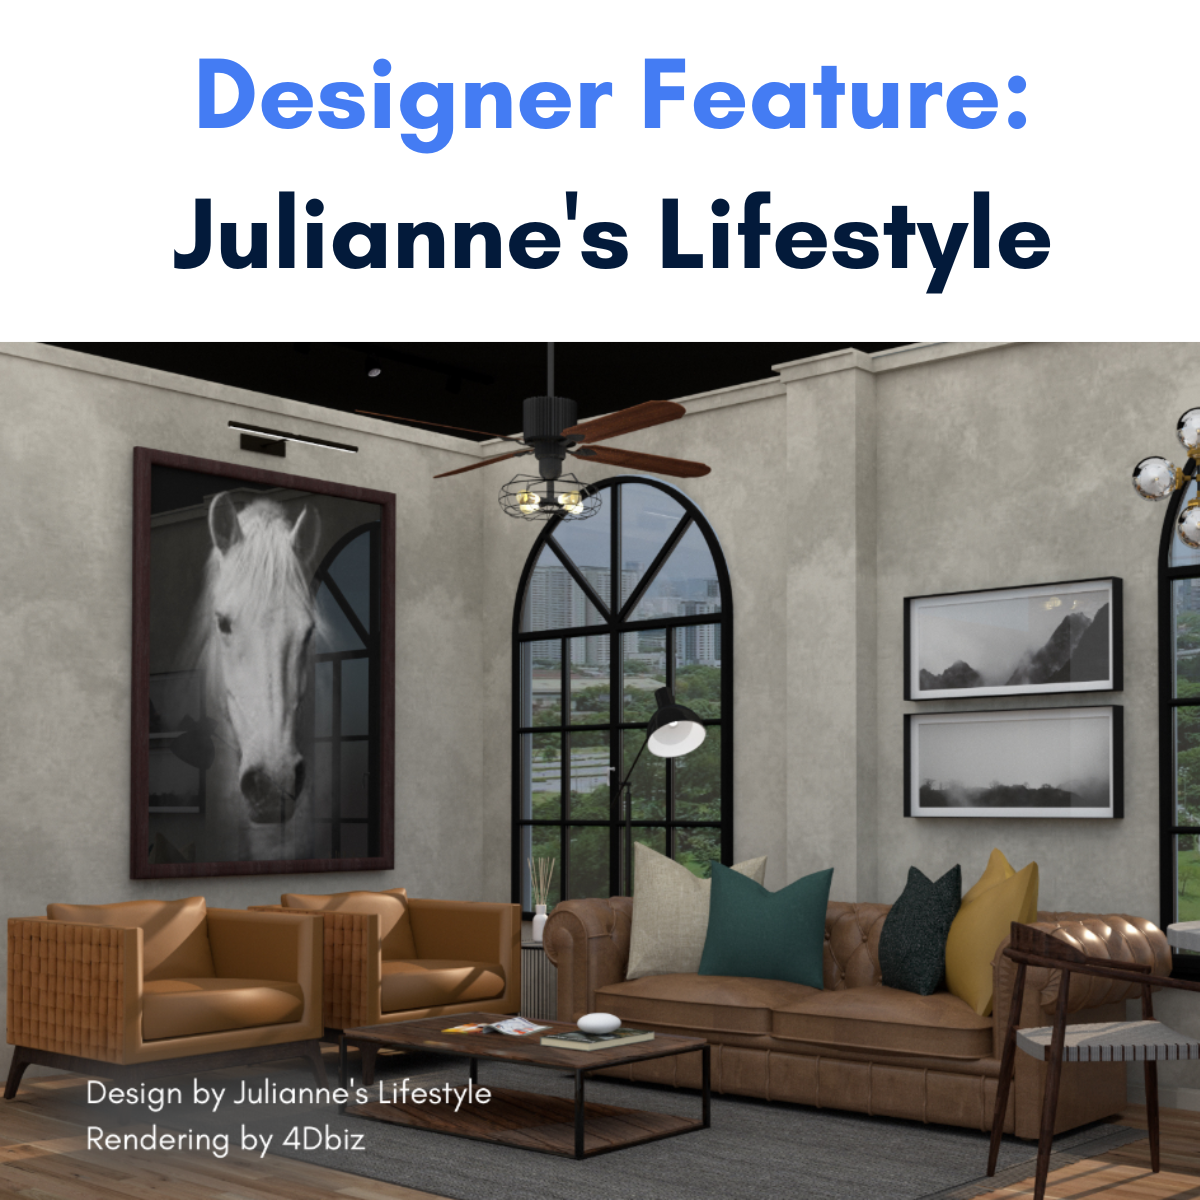 Designer Feature: Julianne's Lifestyle